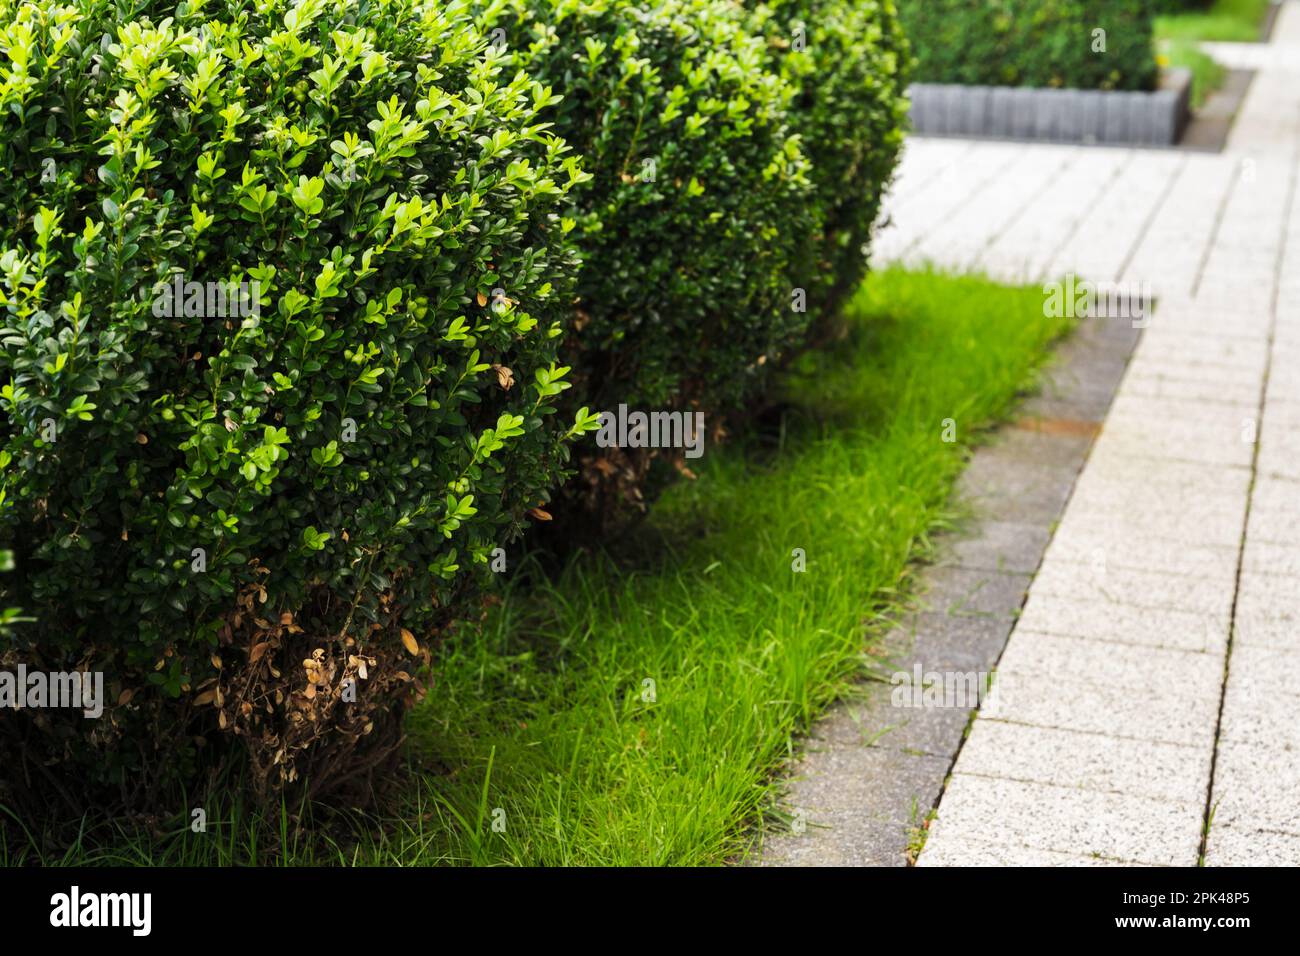 Buxus sinica bushes grow in a garden on green grass near paved park lane Stock Photo